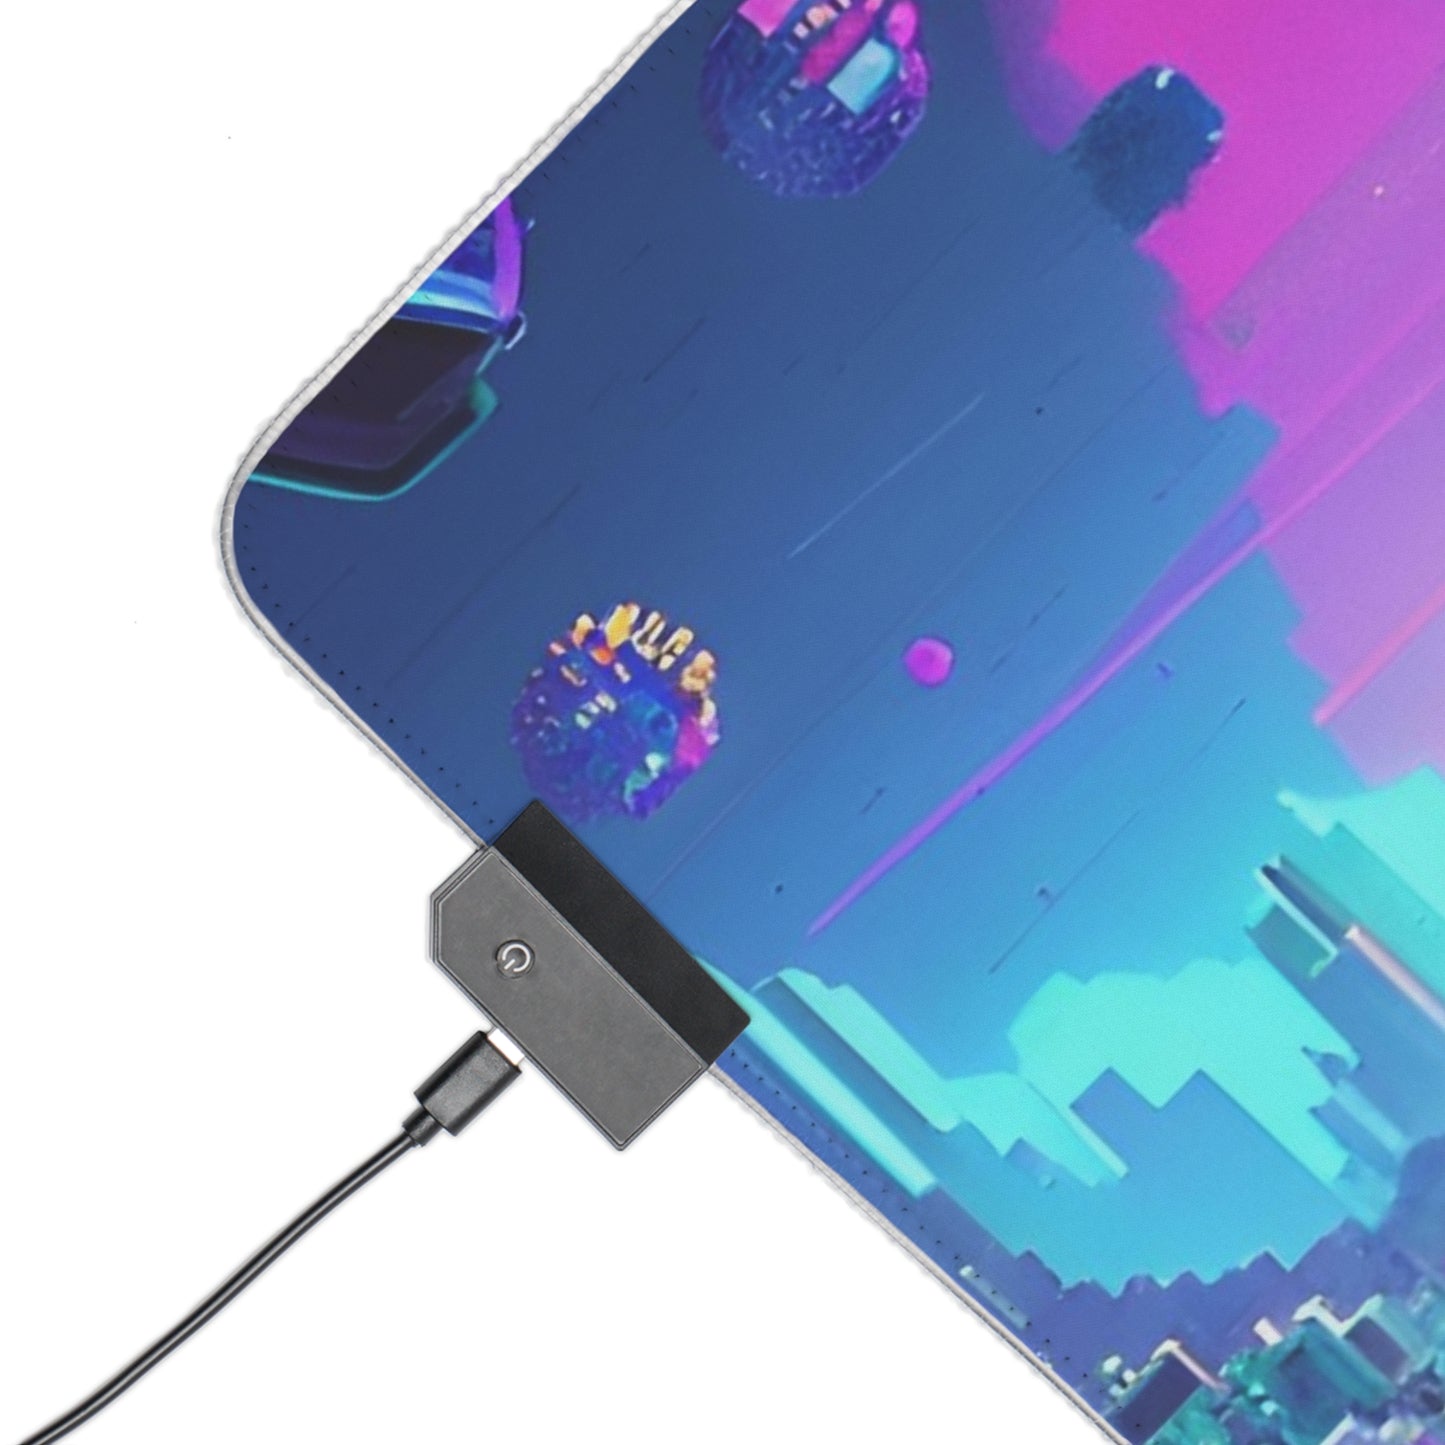 Pixel rider LED Gaming Mouse Pad